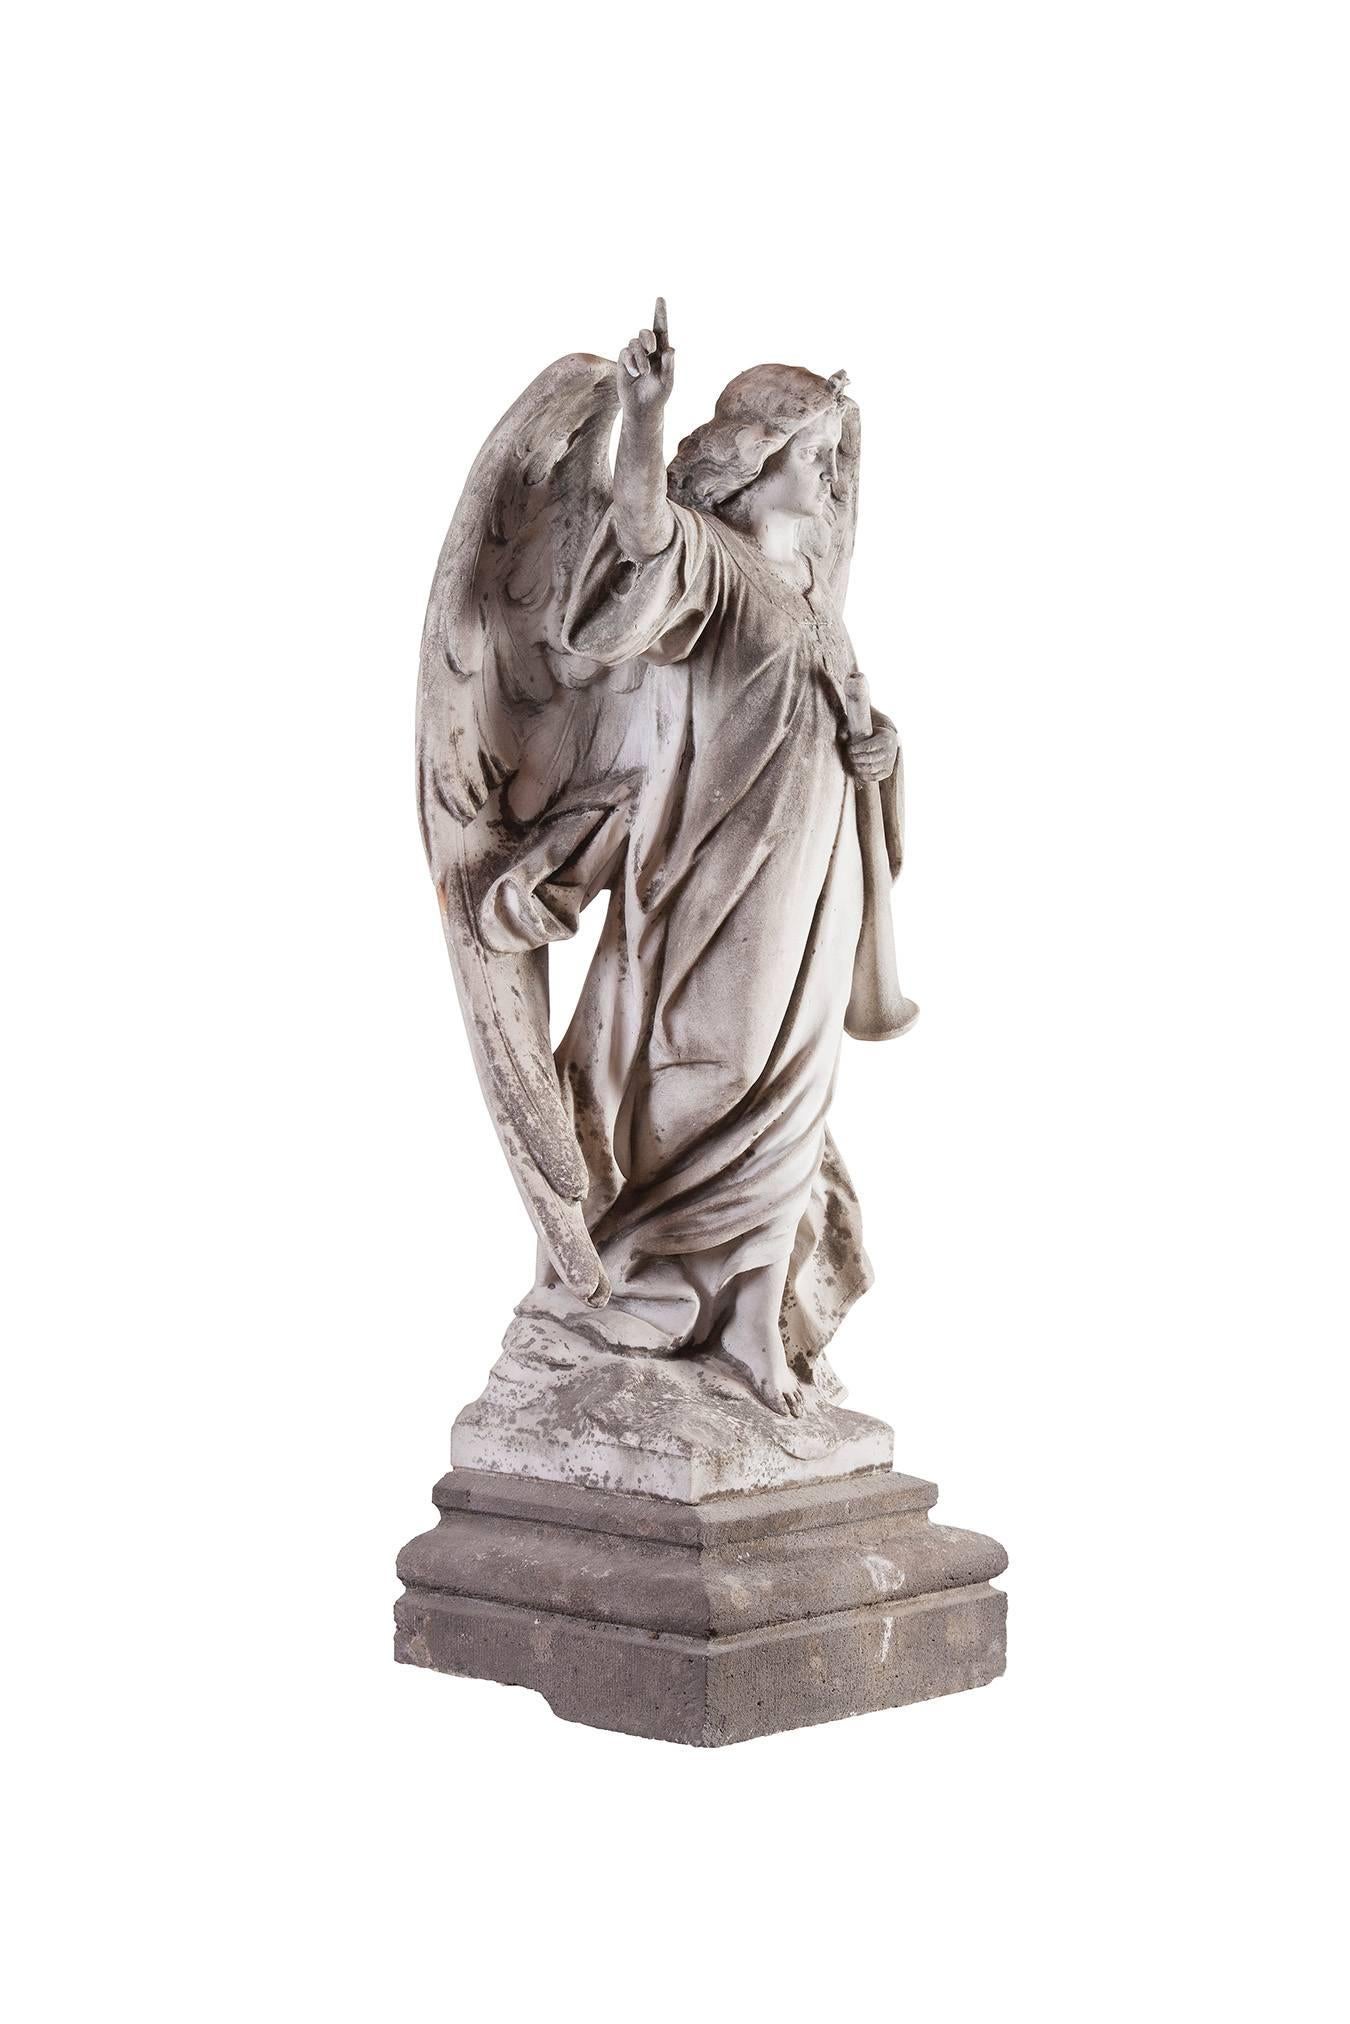 Angel, high quality handwork from the 19th century.
Showing Archangel Gabriel.